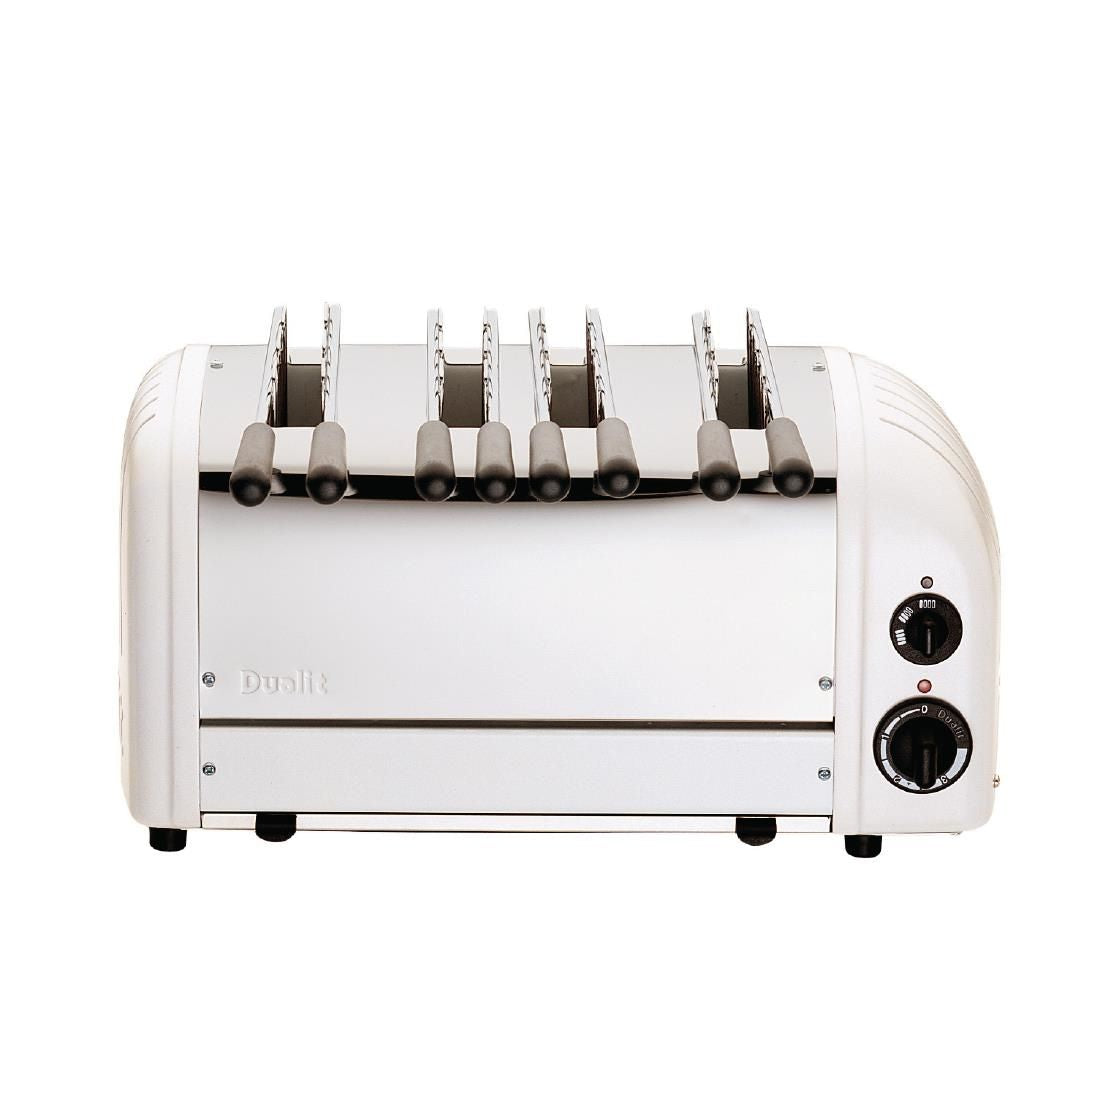 Dualit 2 x 2 Combi Vario 4 Slice Toaster Stainless 42174 - L139